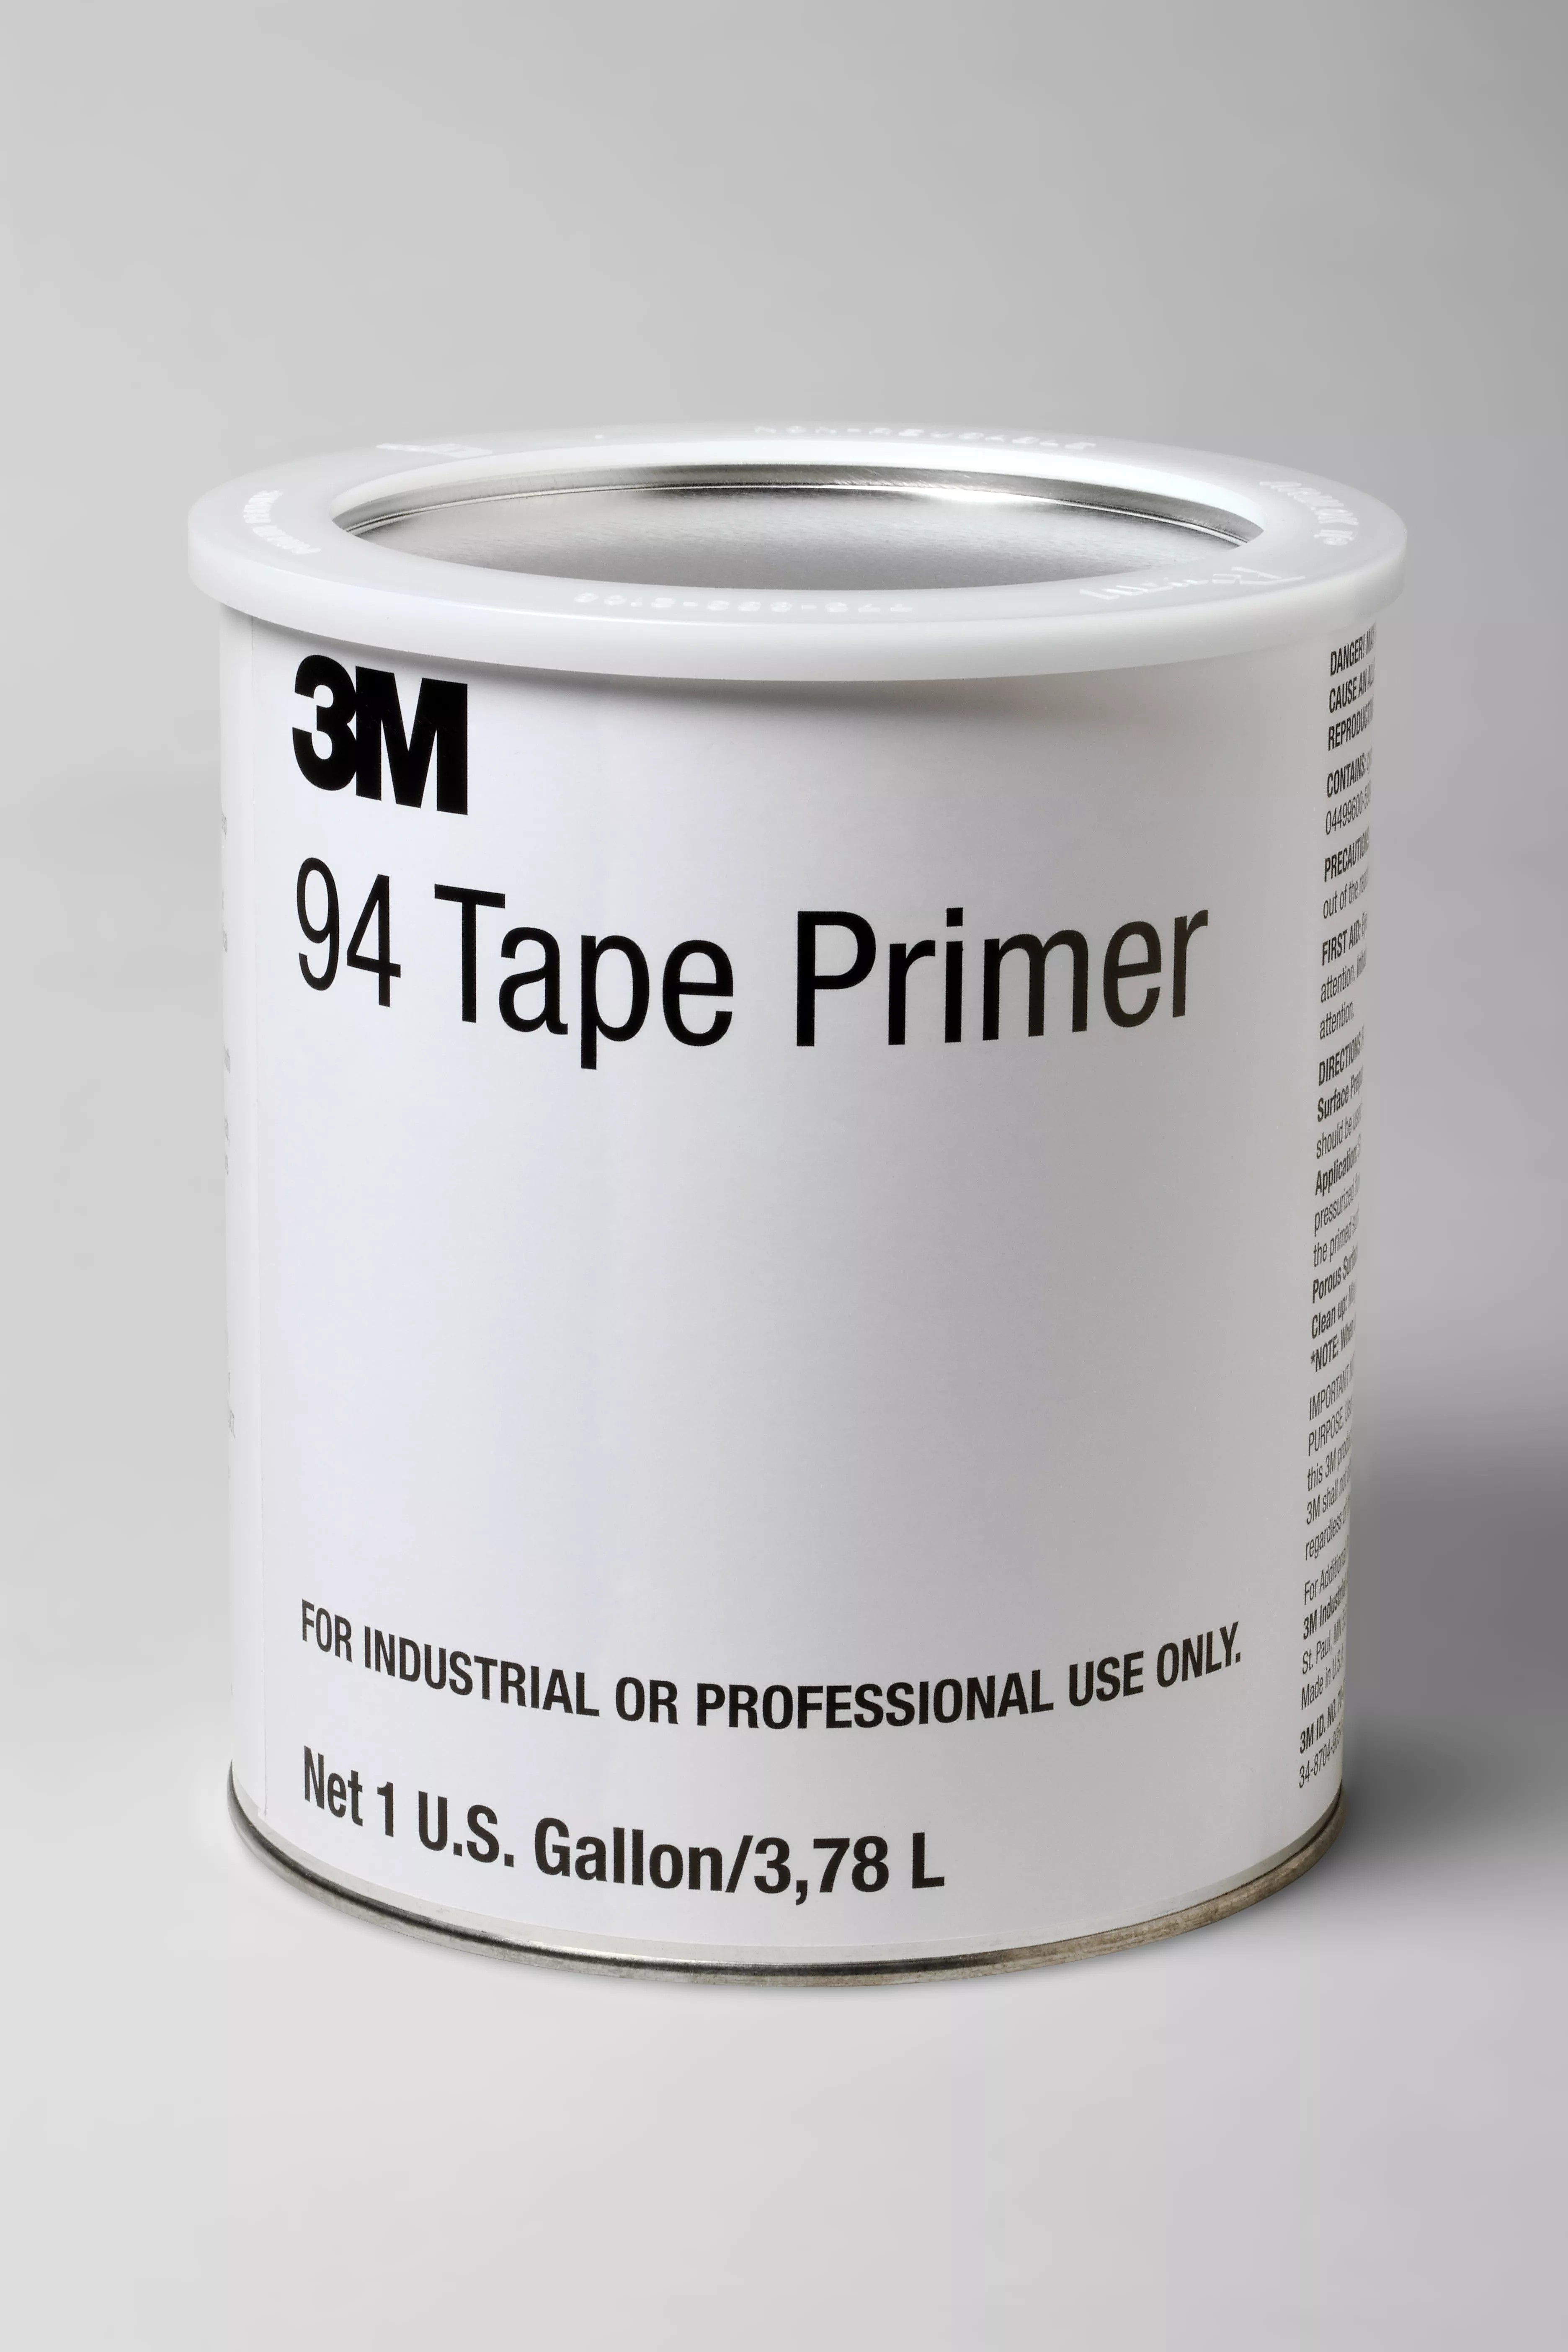 3M™ Tape Primer 94, Light Yellow, 1 Gallon Drum (Can), 4 Bottles/Case